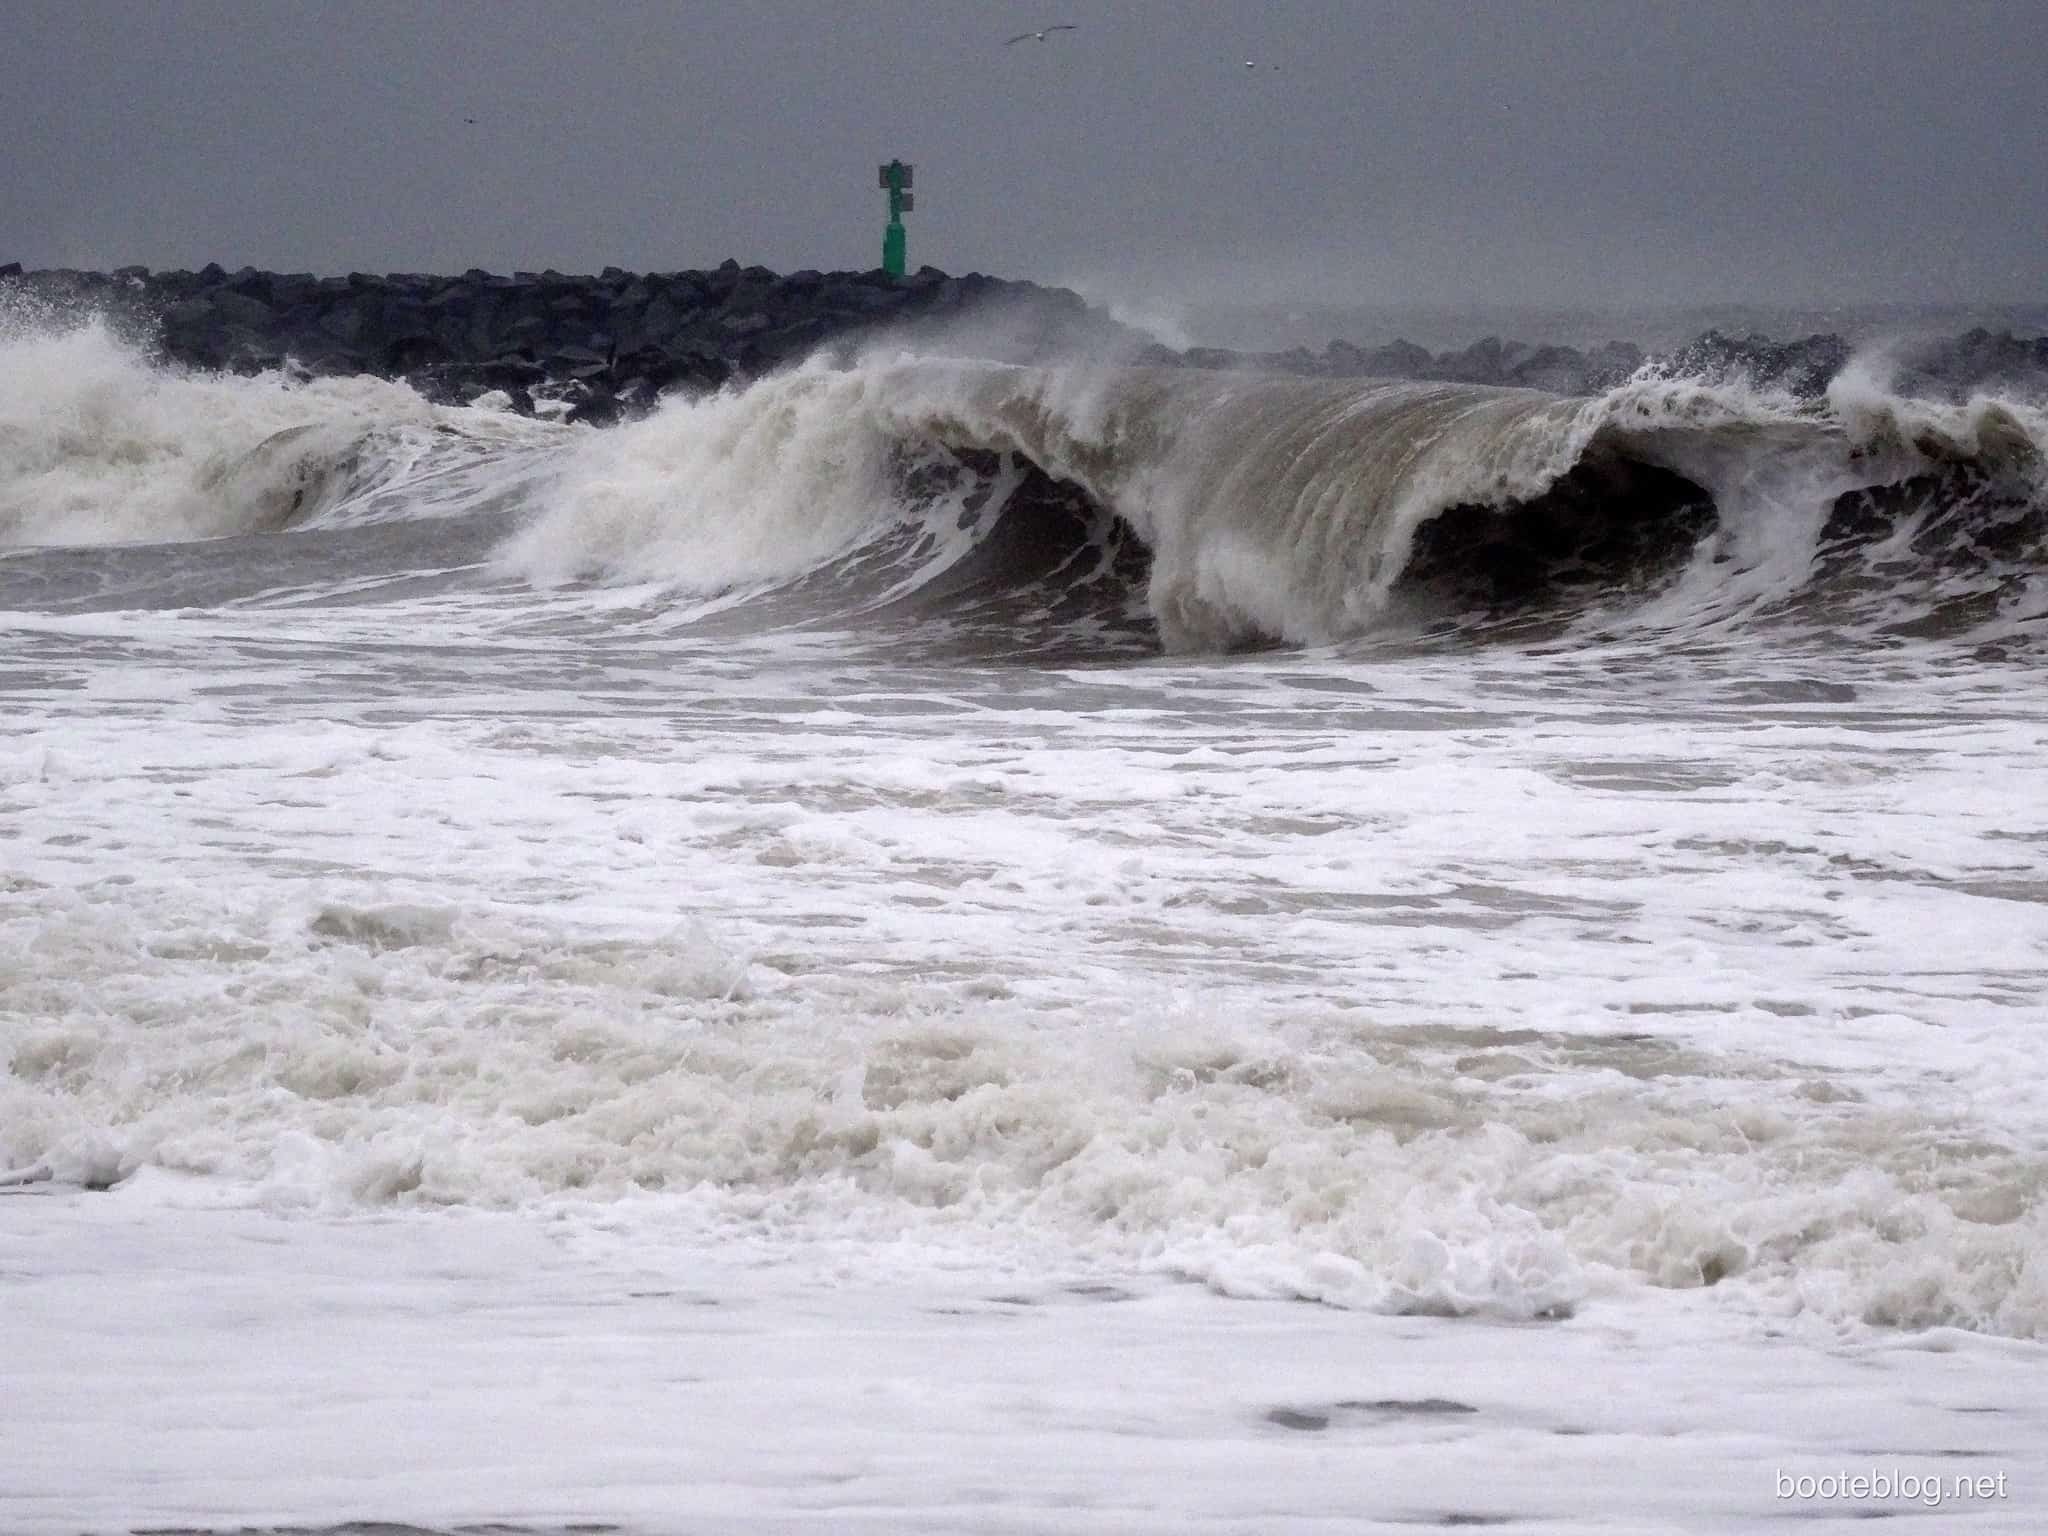 Schweres Wetter, hohe Wellen - schon kommt die Angst vor Seekranktheit